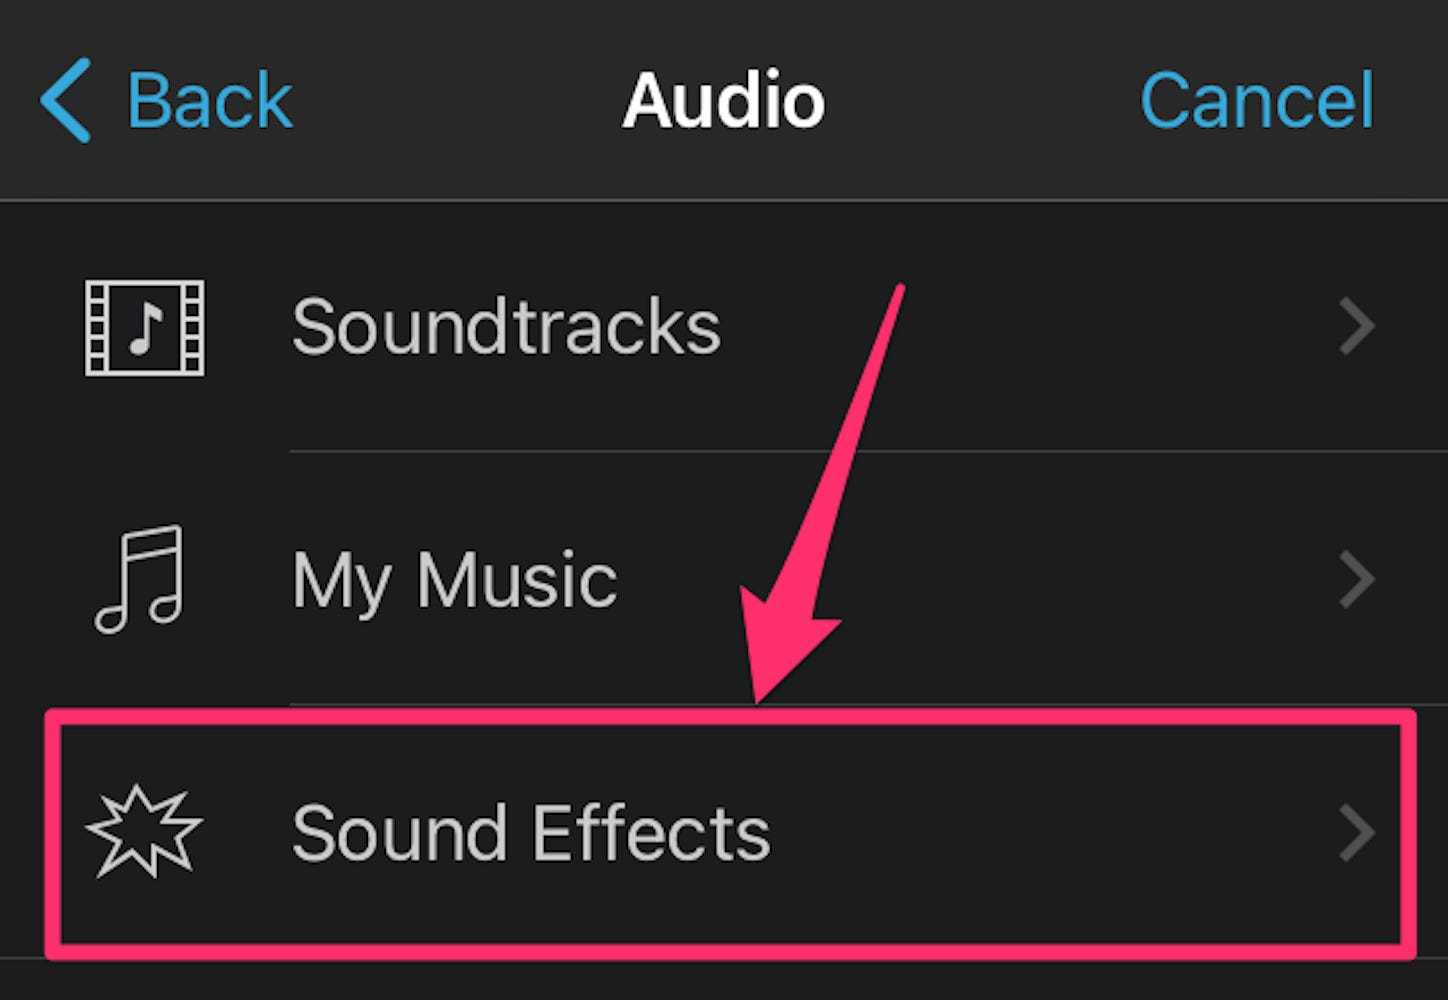 iMovie audio options